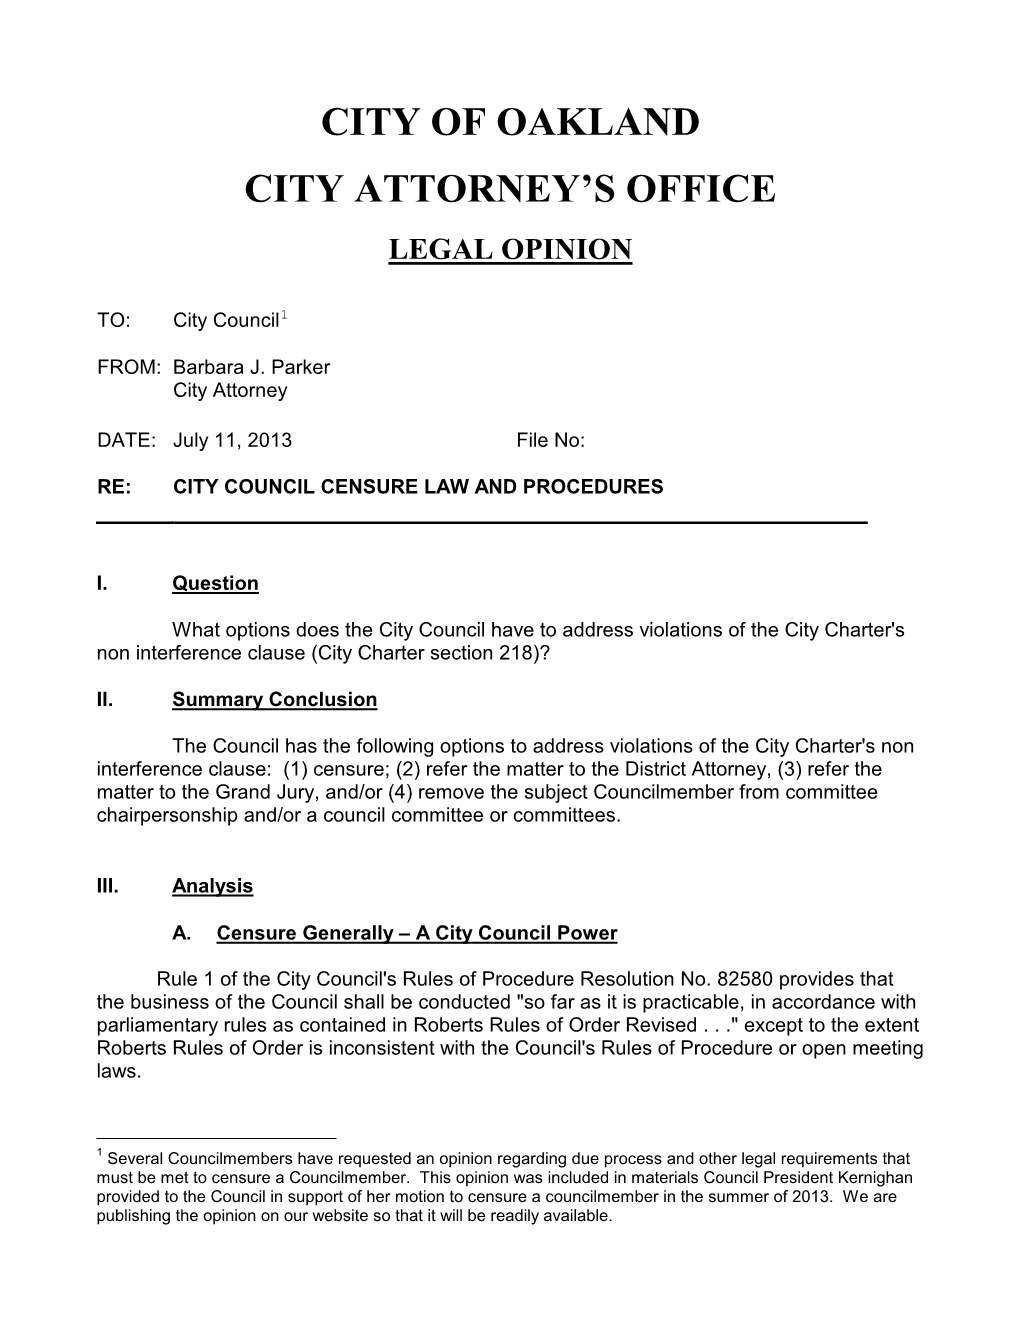 CITY COUNCIL CENSURE LAW and PROCEDURES 7 11 2013.Pdf